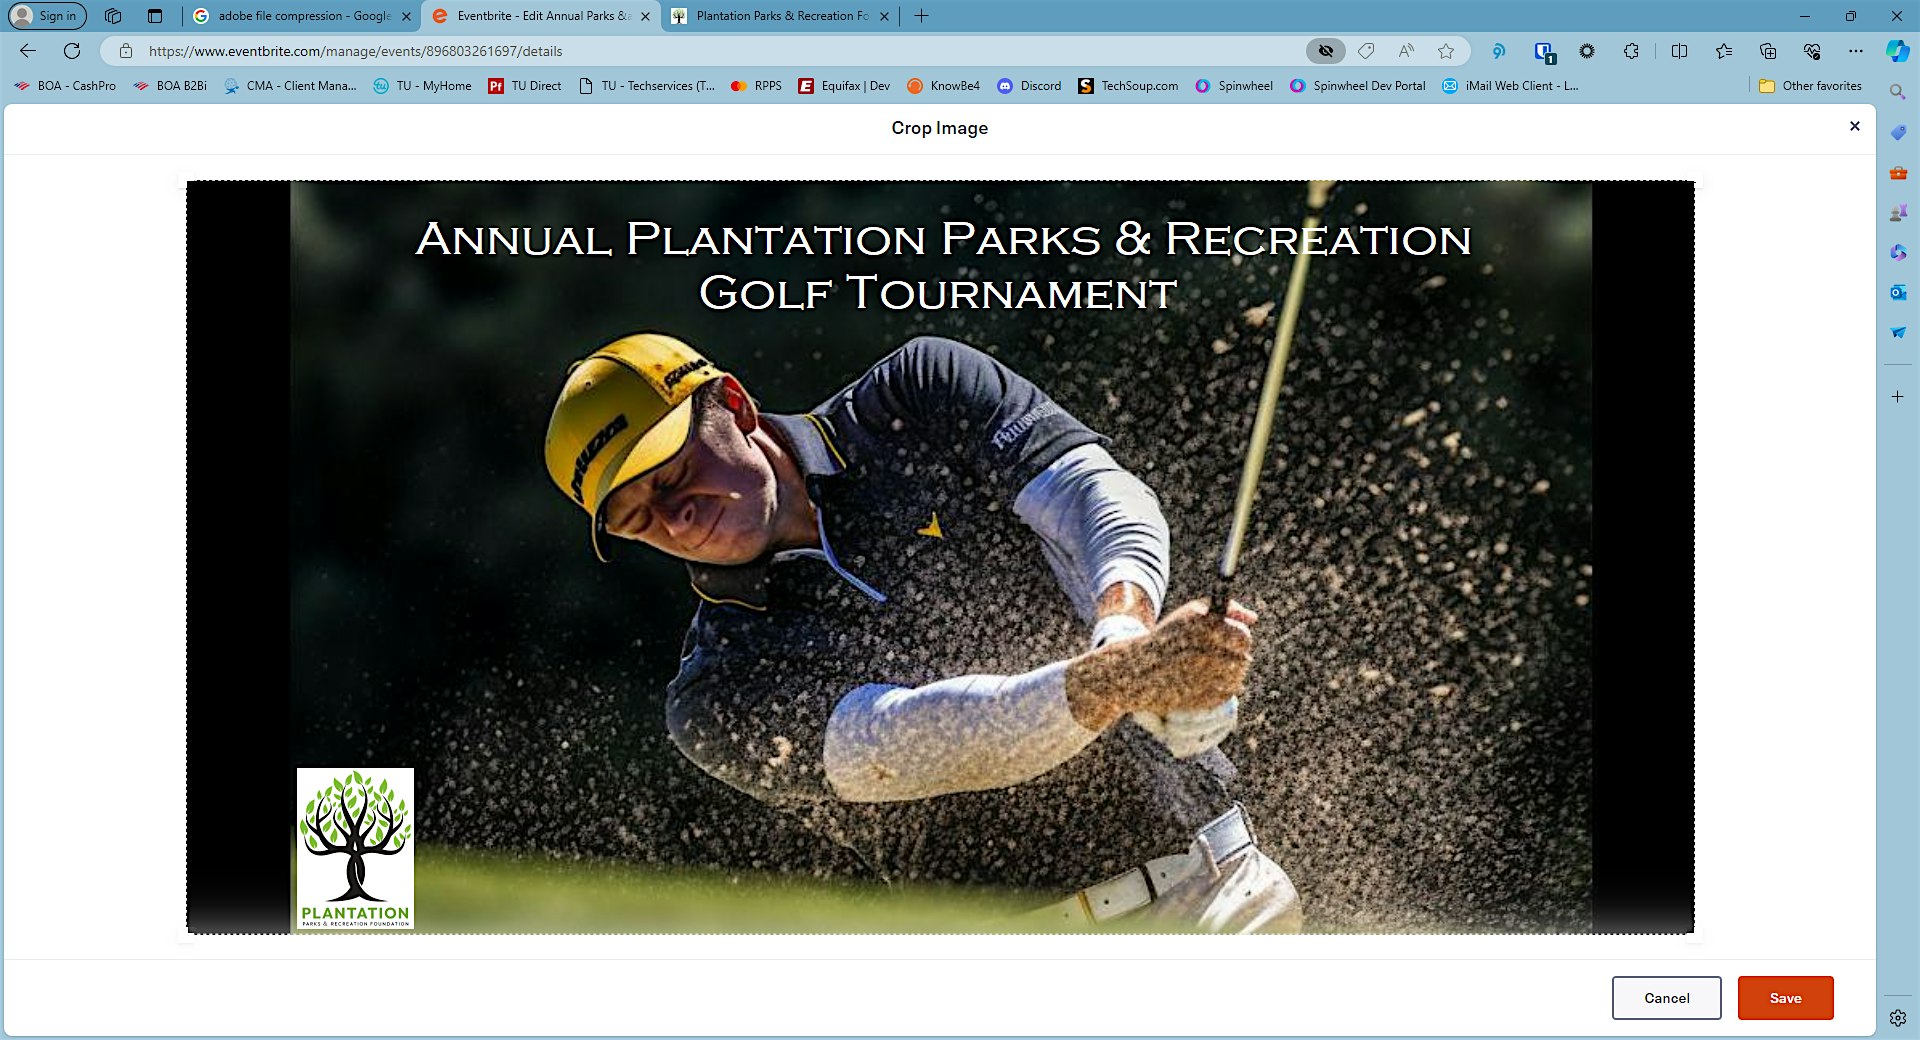 Annual Plantation Parks & Recreation Golf Tournament